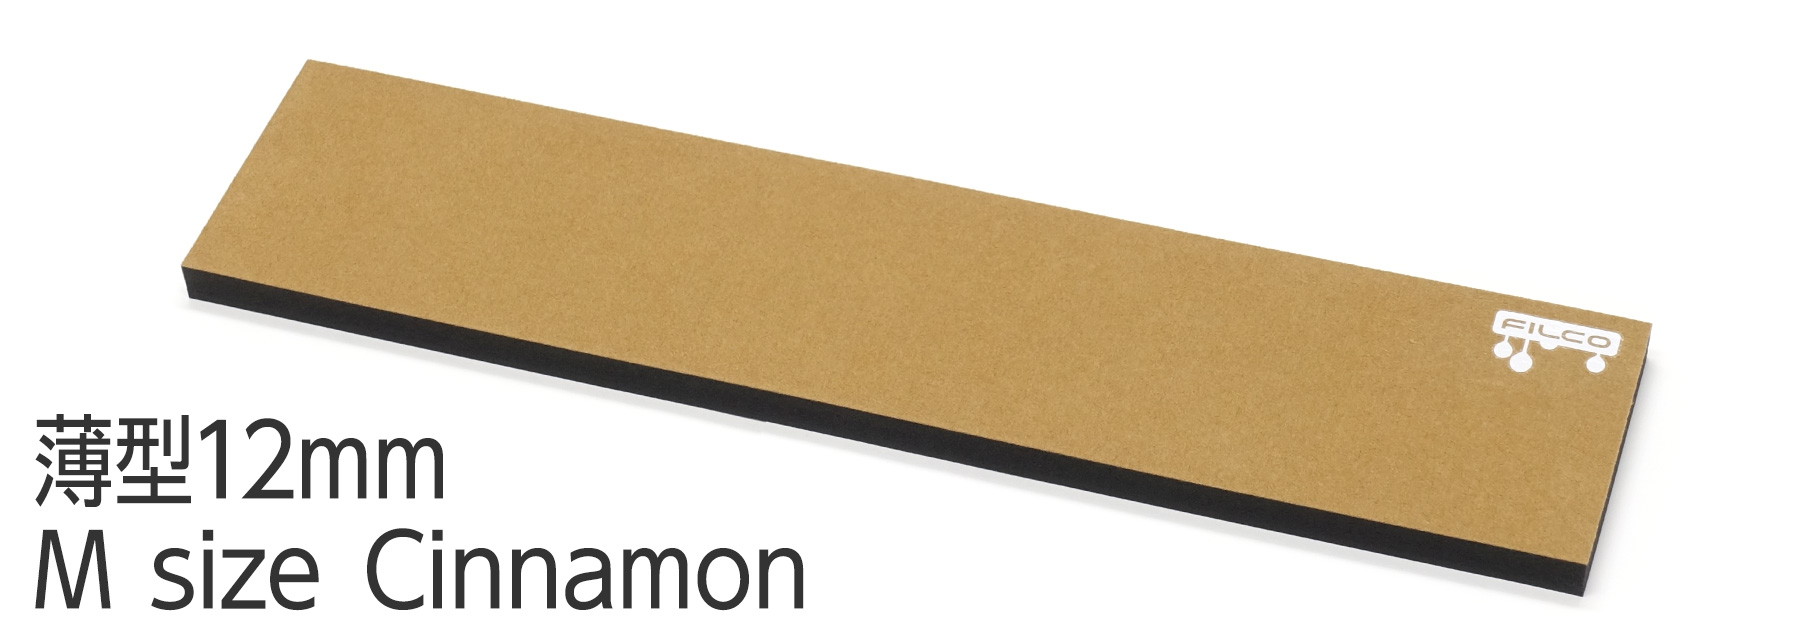 FILCO Majestouch Wrist Rest "Macaron" 薄型12mm・Mサイズ・Cinnamon